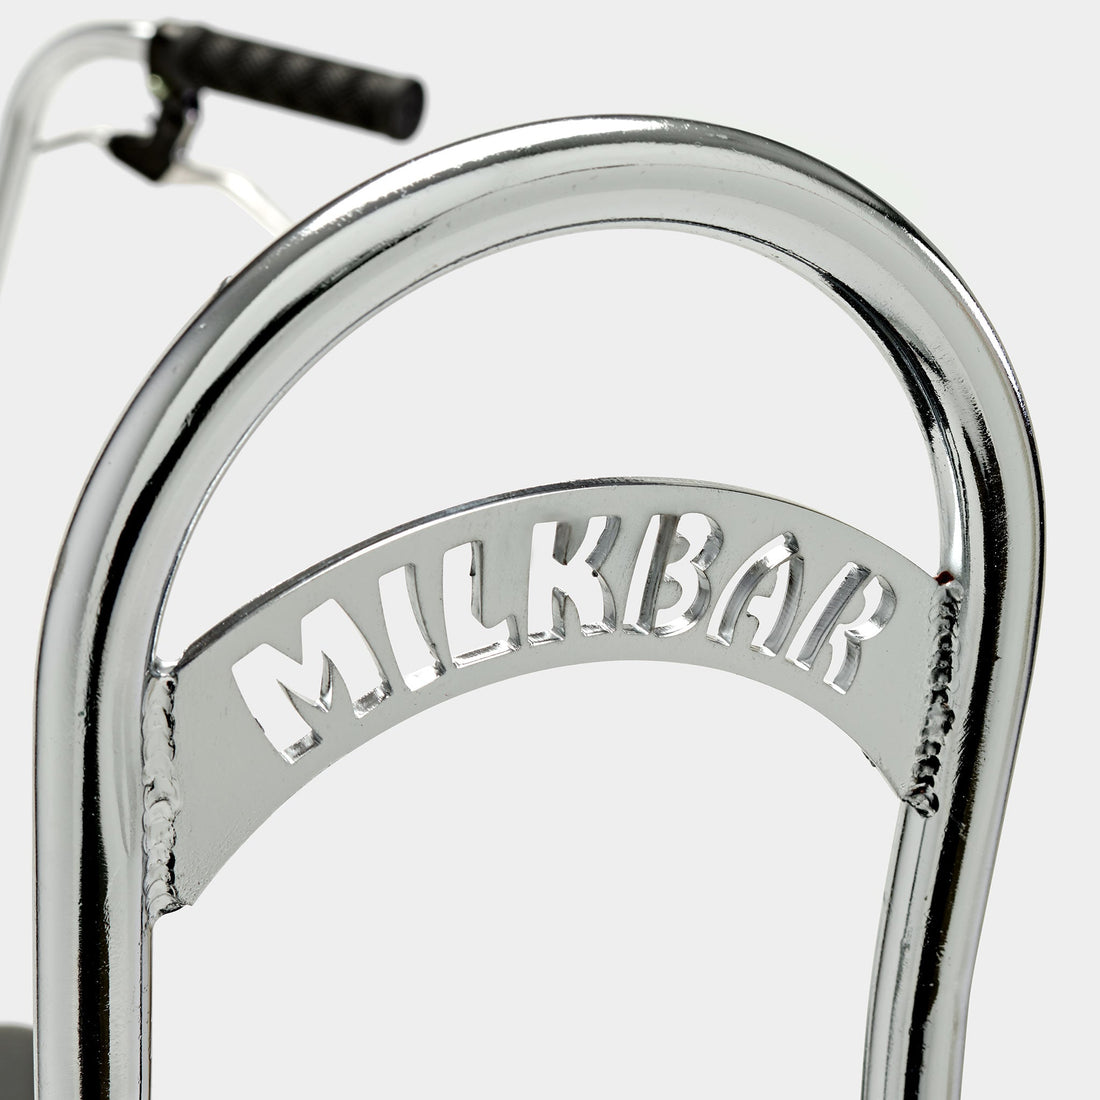 Icy Chrome 26" Milkbar bike seat frame logo